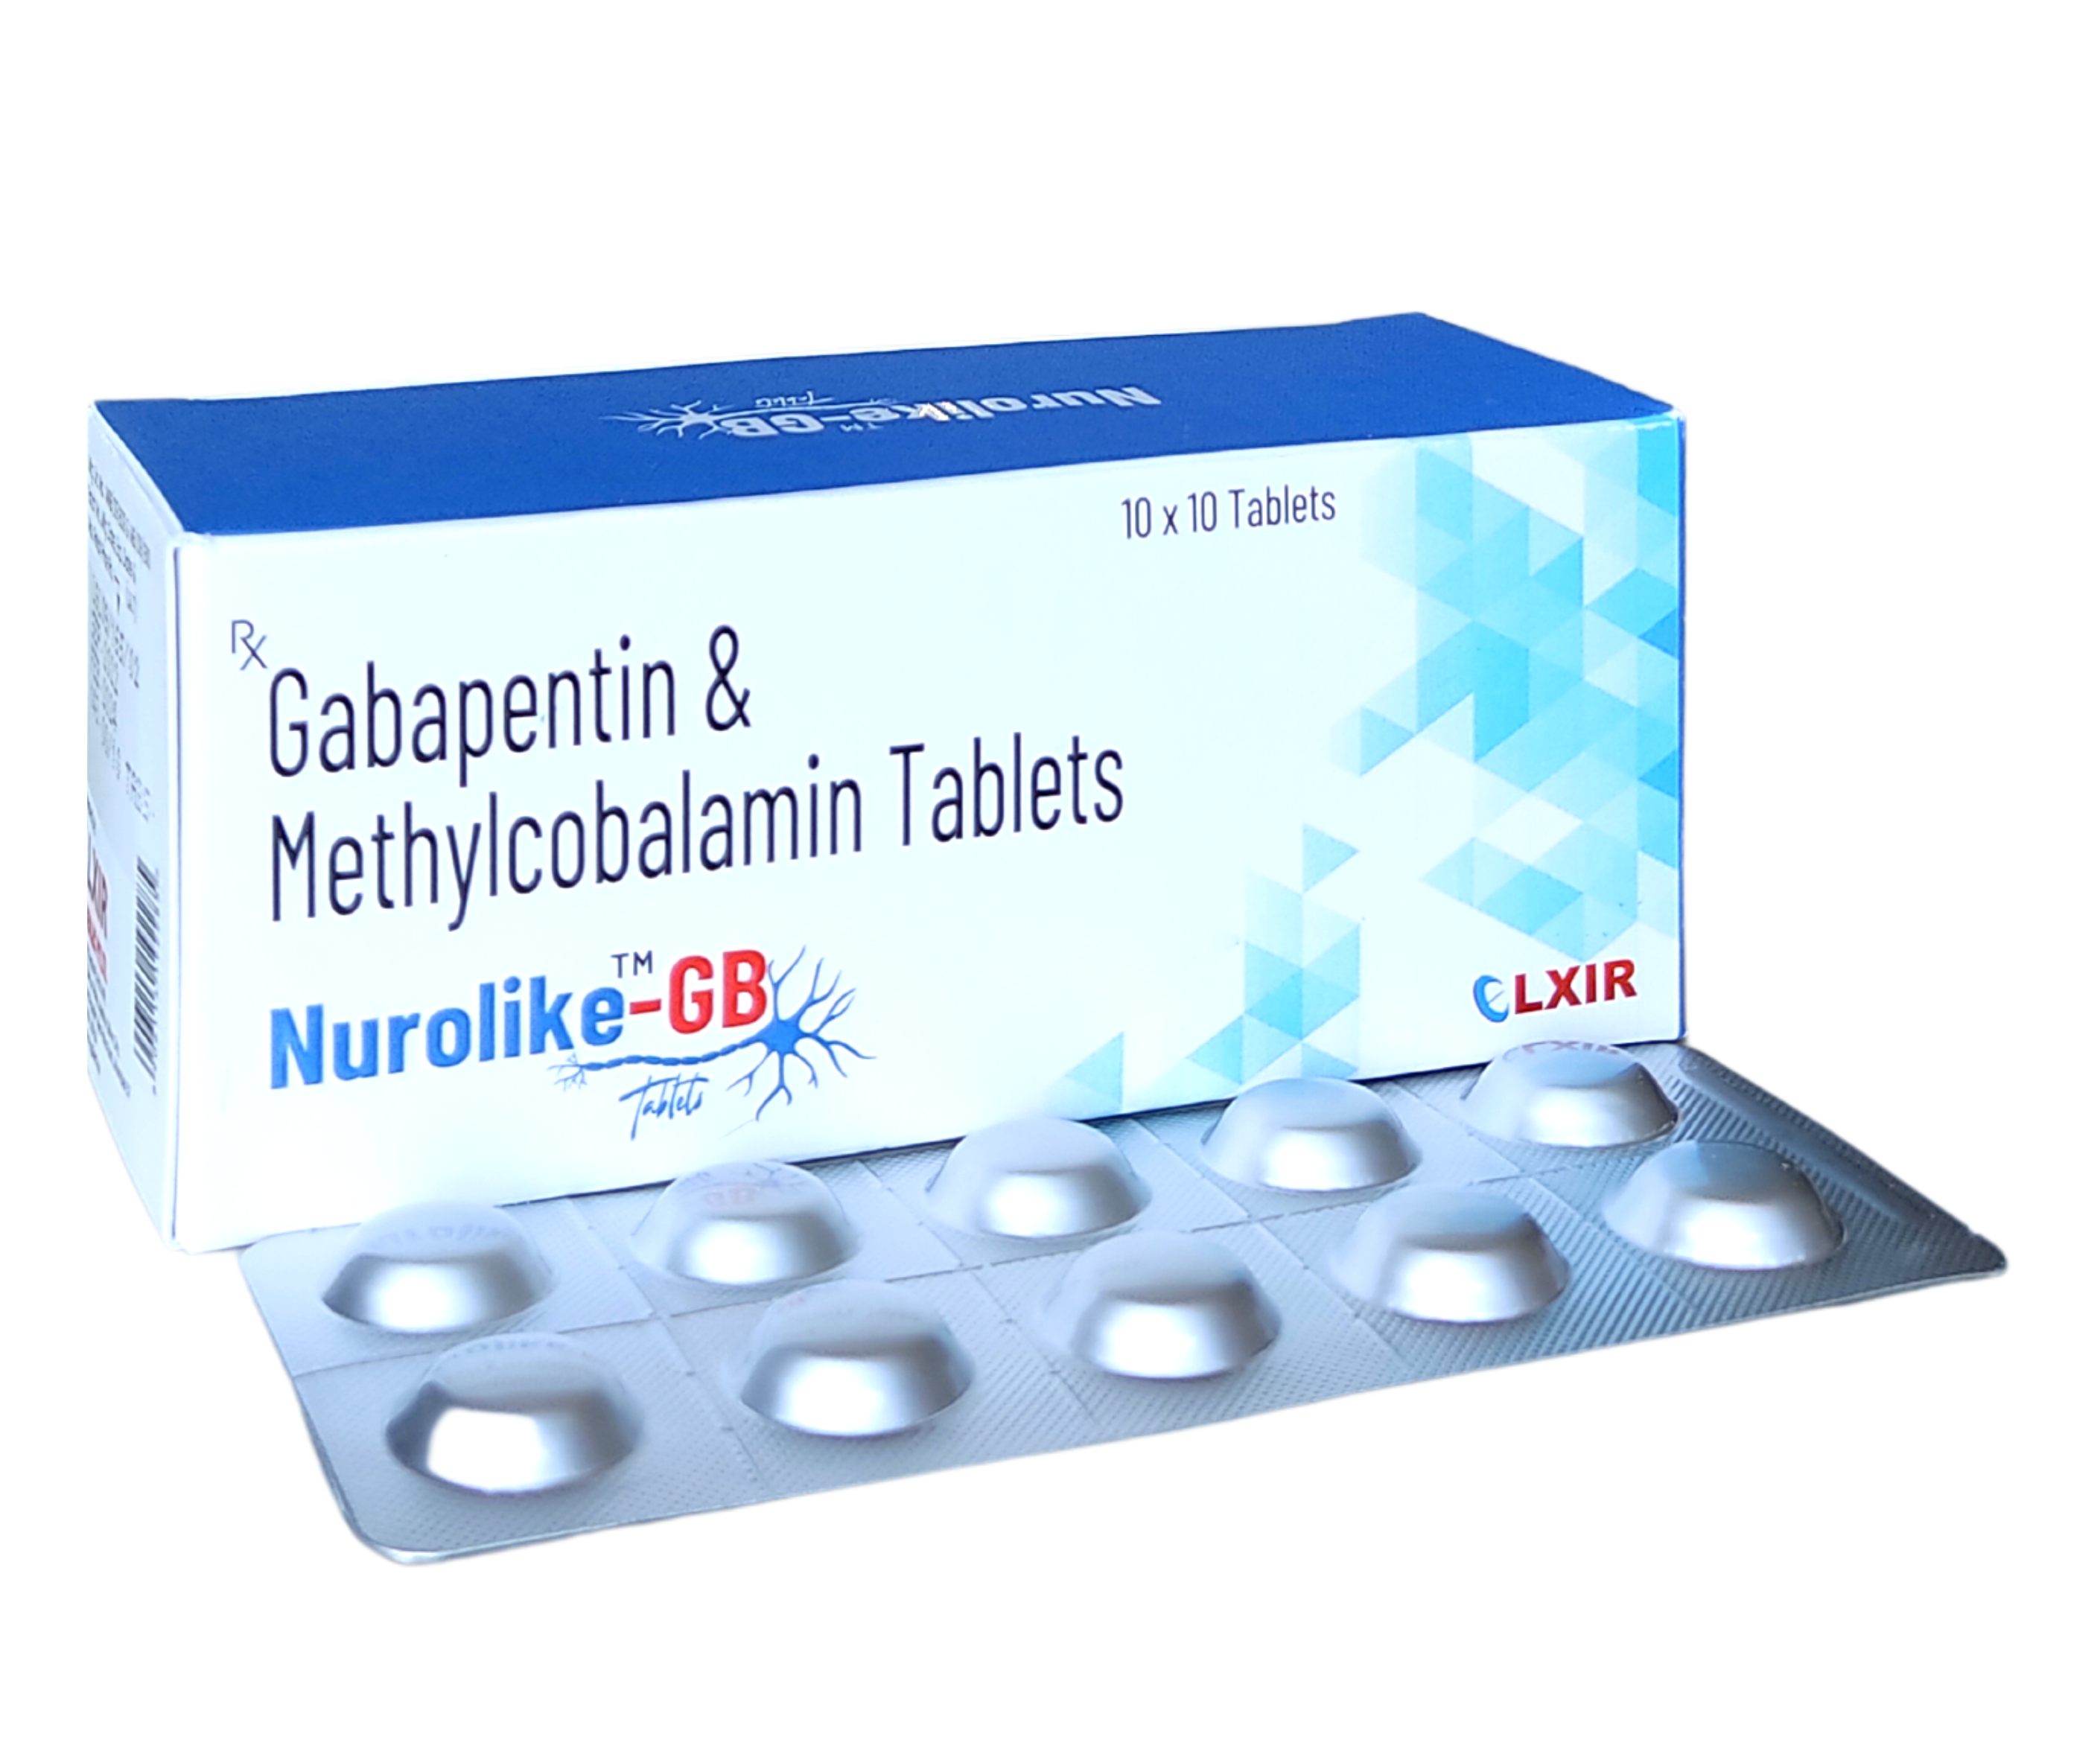 Ganapentin & Methylcobalamin Tablets